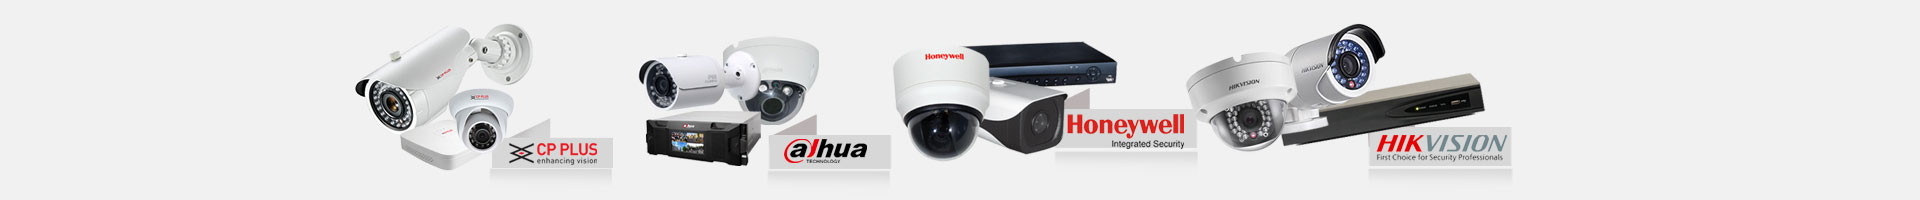 CCTV Security Solution Company - Modi Infotech Services